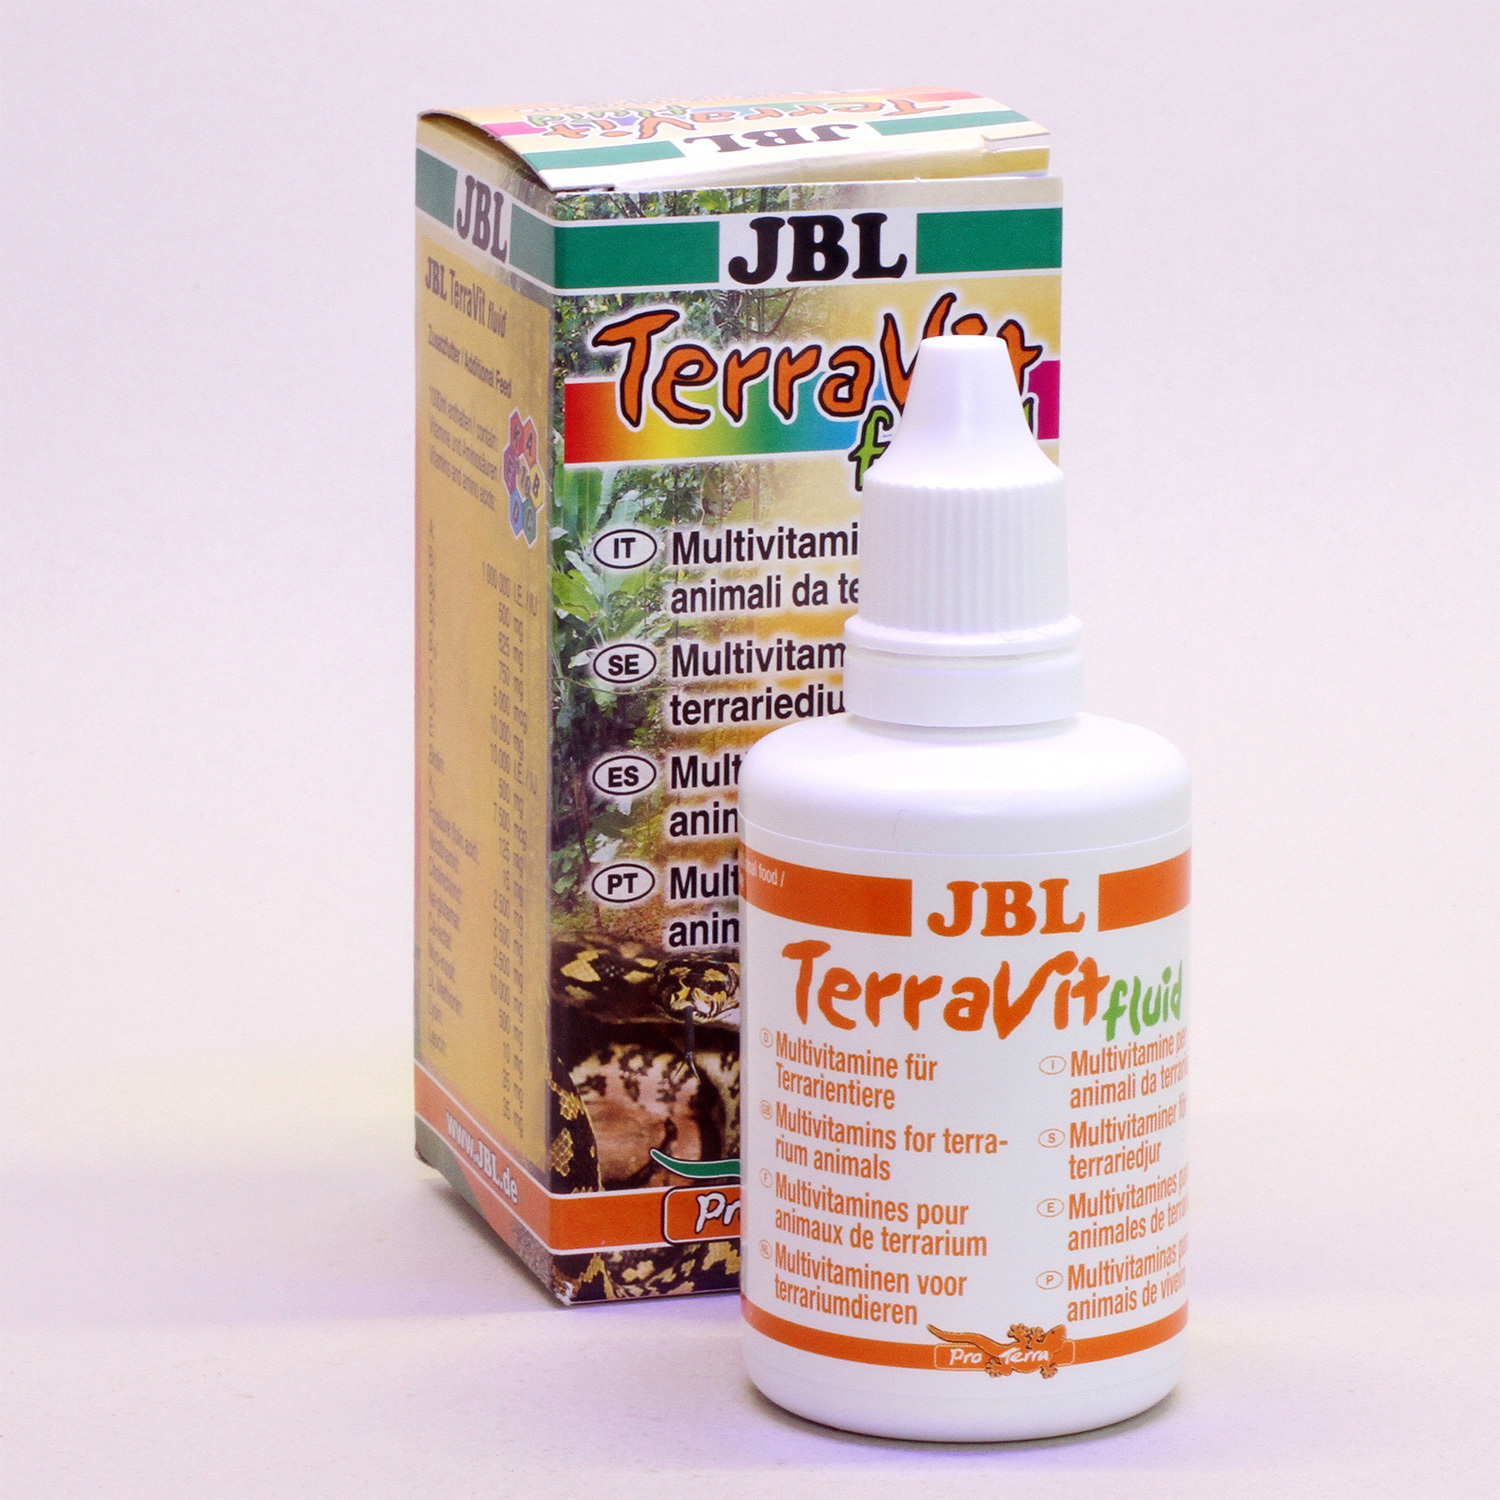 JBL TerraVit vitamine lichide pentru animale de terariu - zoom